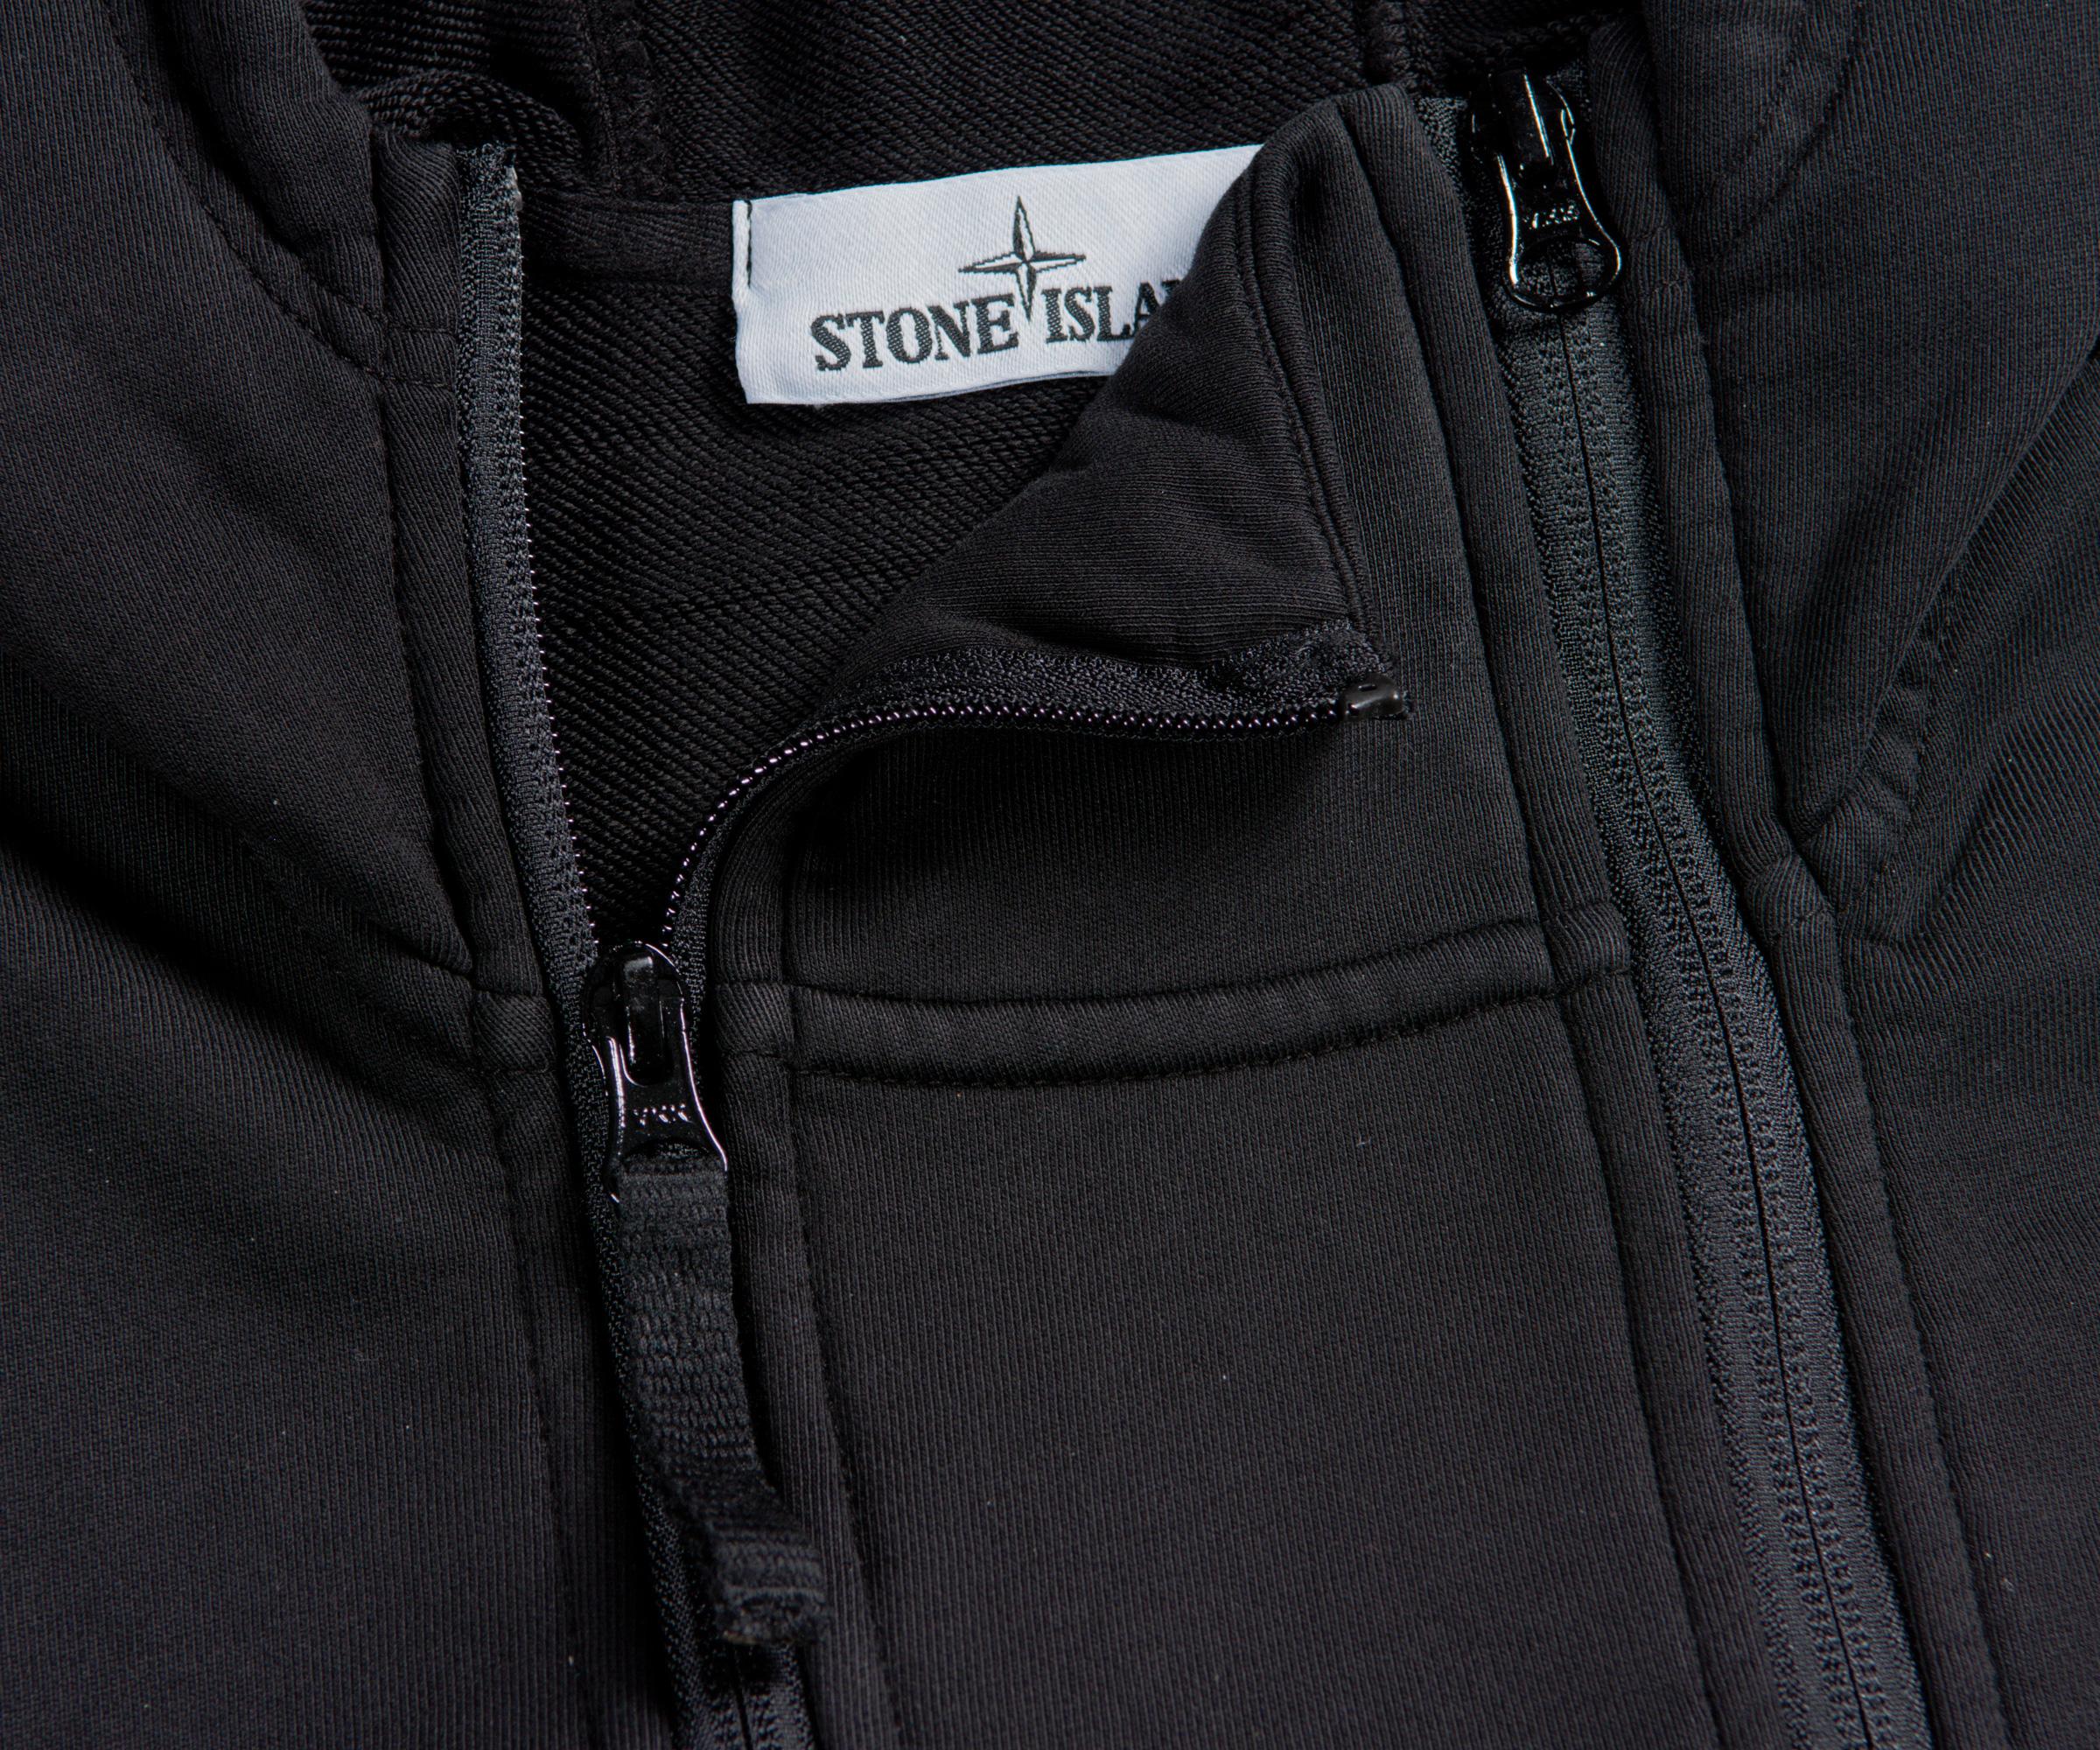 Stone Island 'double Zip' Hooded Sweatshirt Black for Men - Lyst